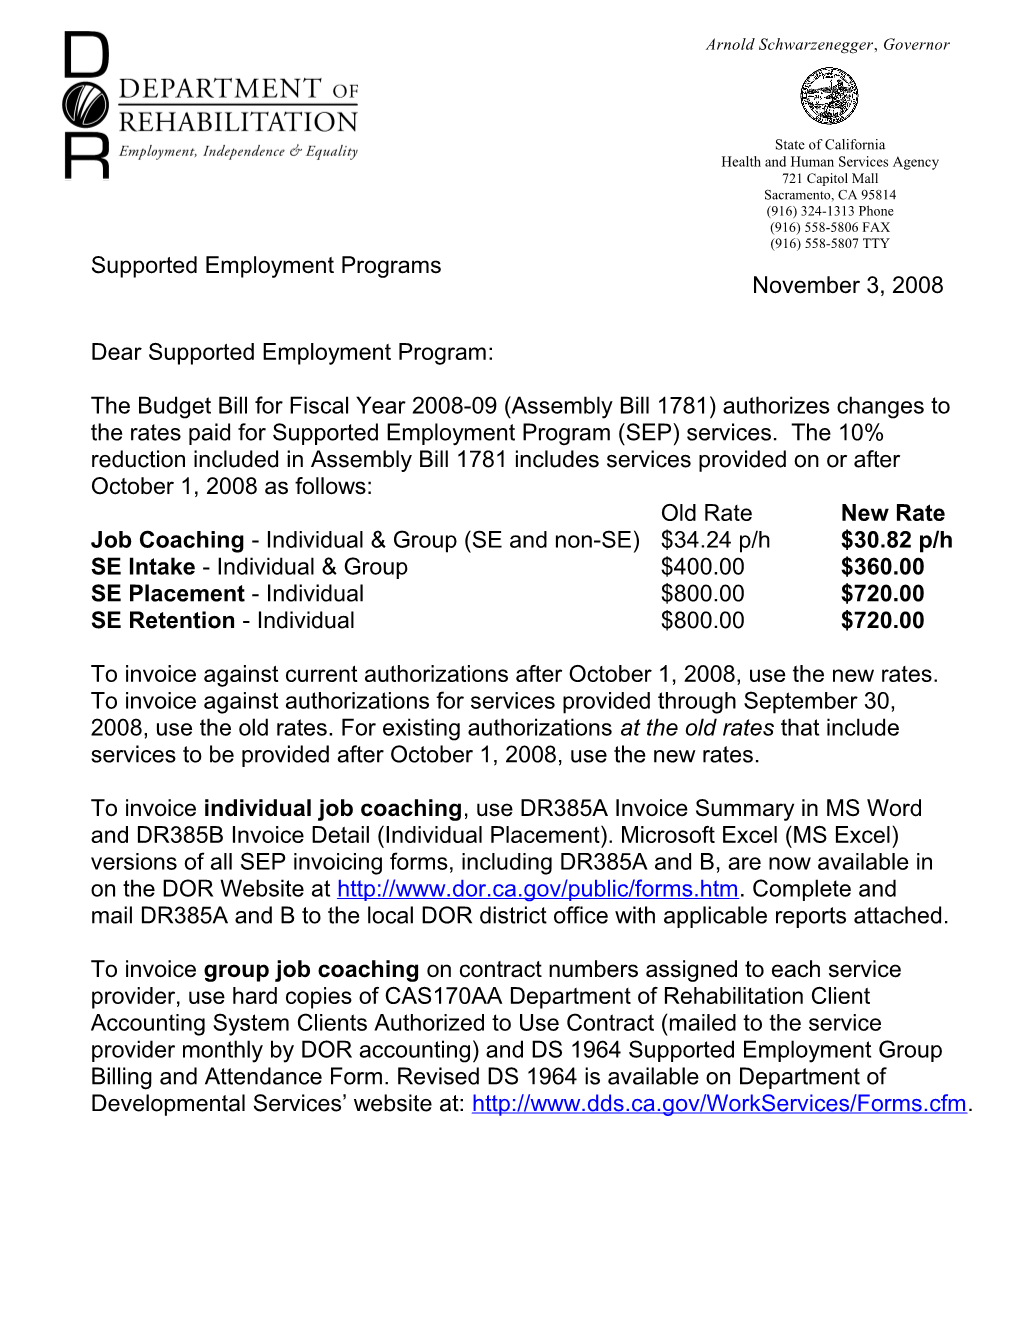 Dear Supported Employment Program